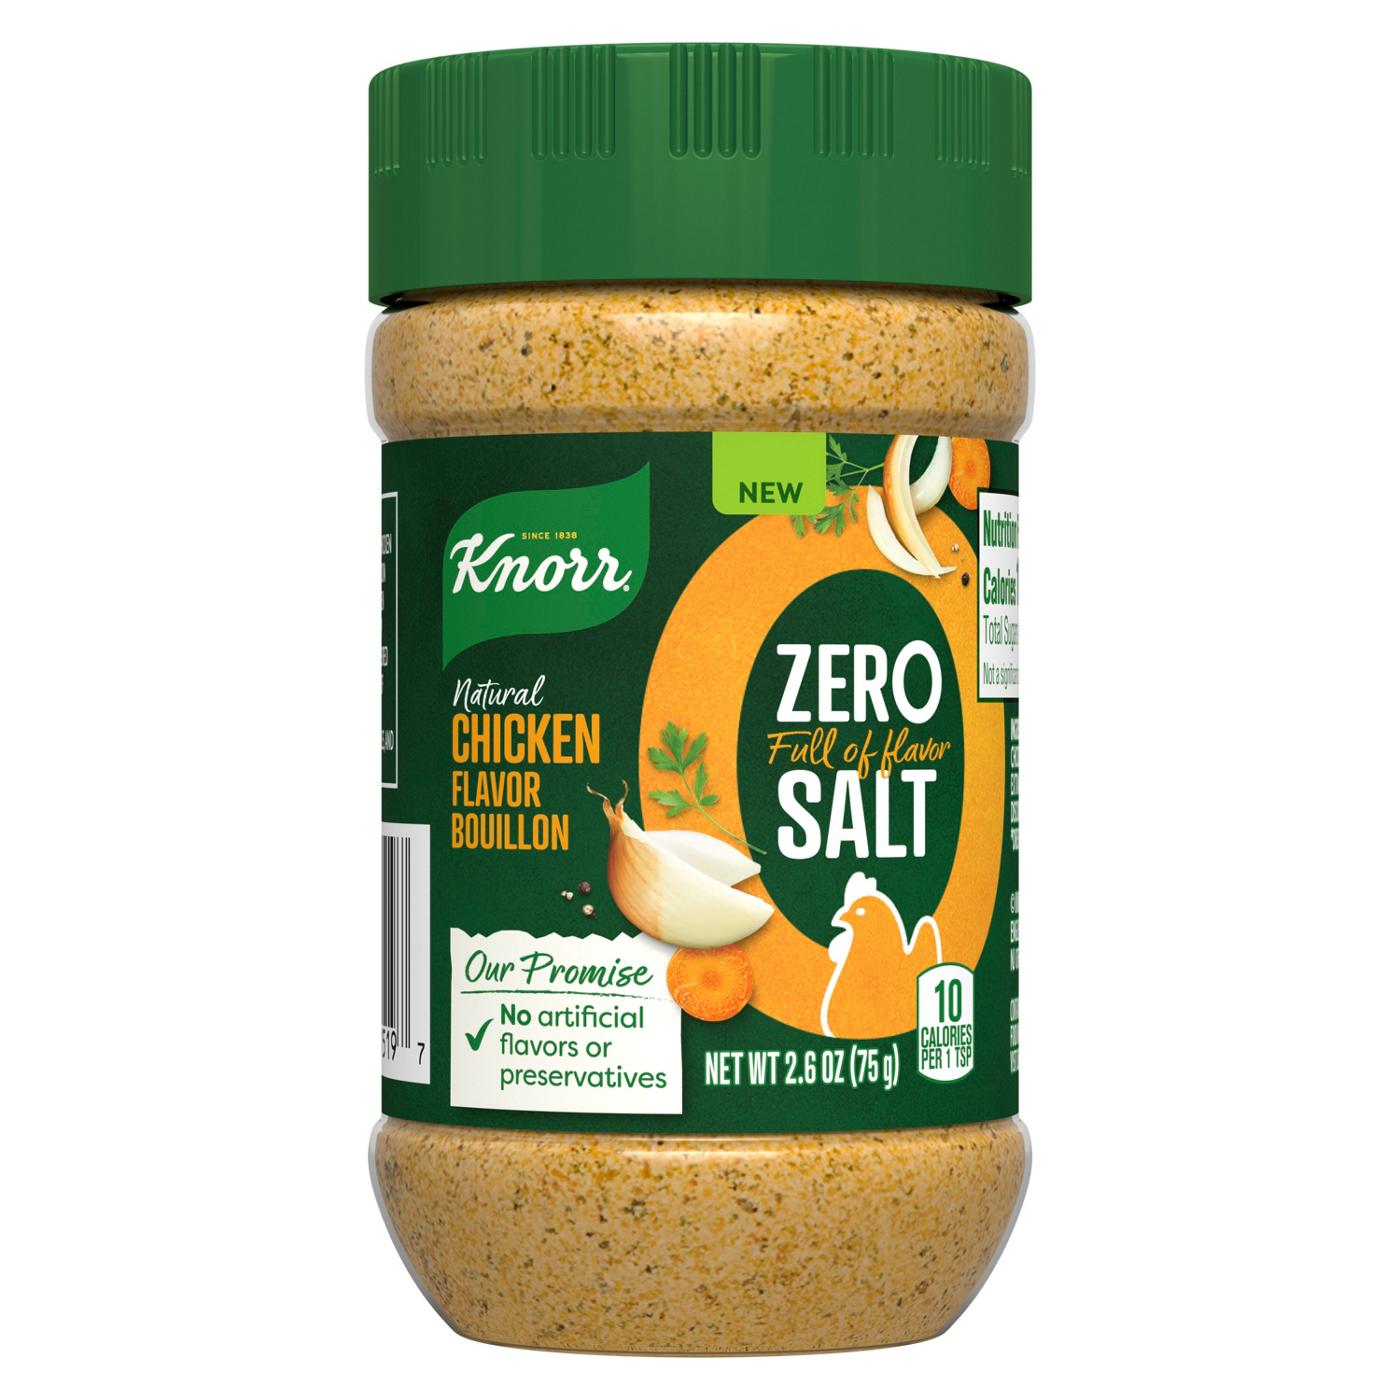 Knorr Zero Salt Powder Bouillon Natural Chicken Flavor Bouillon; image 1 of 5